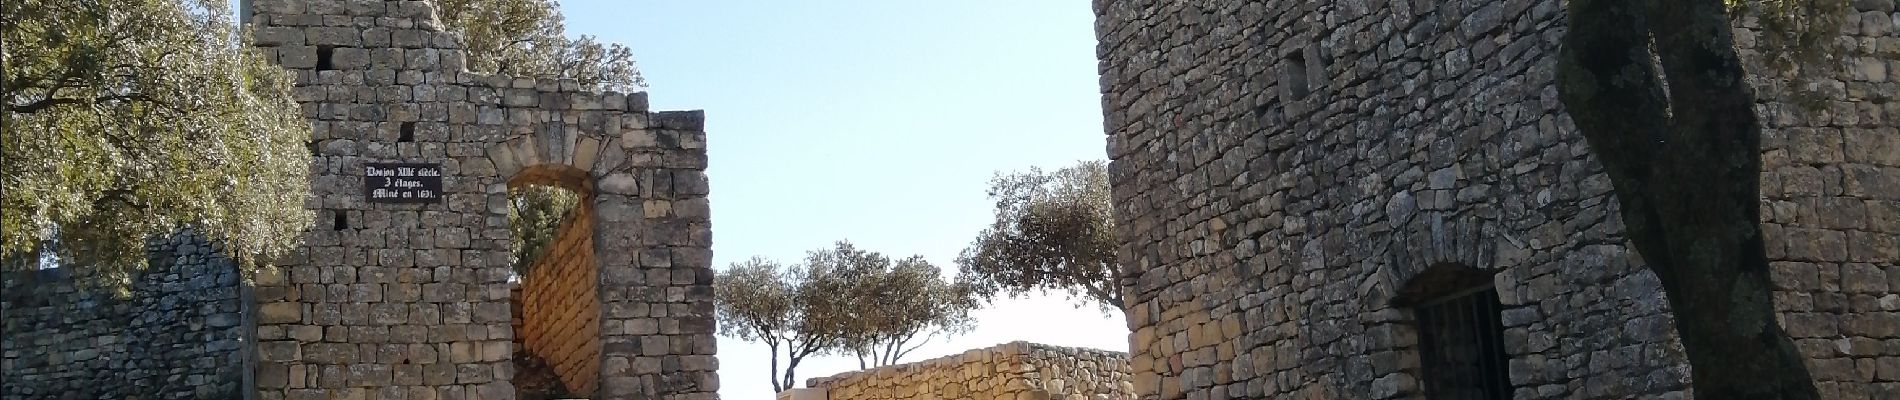 Tour Wandern Chusclan - château de gicon - Photo